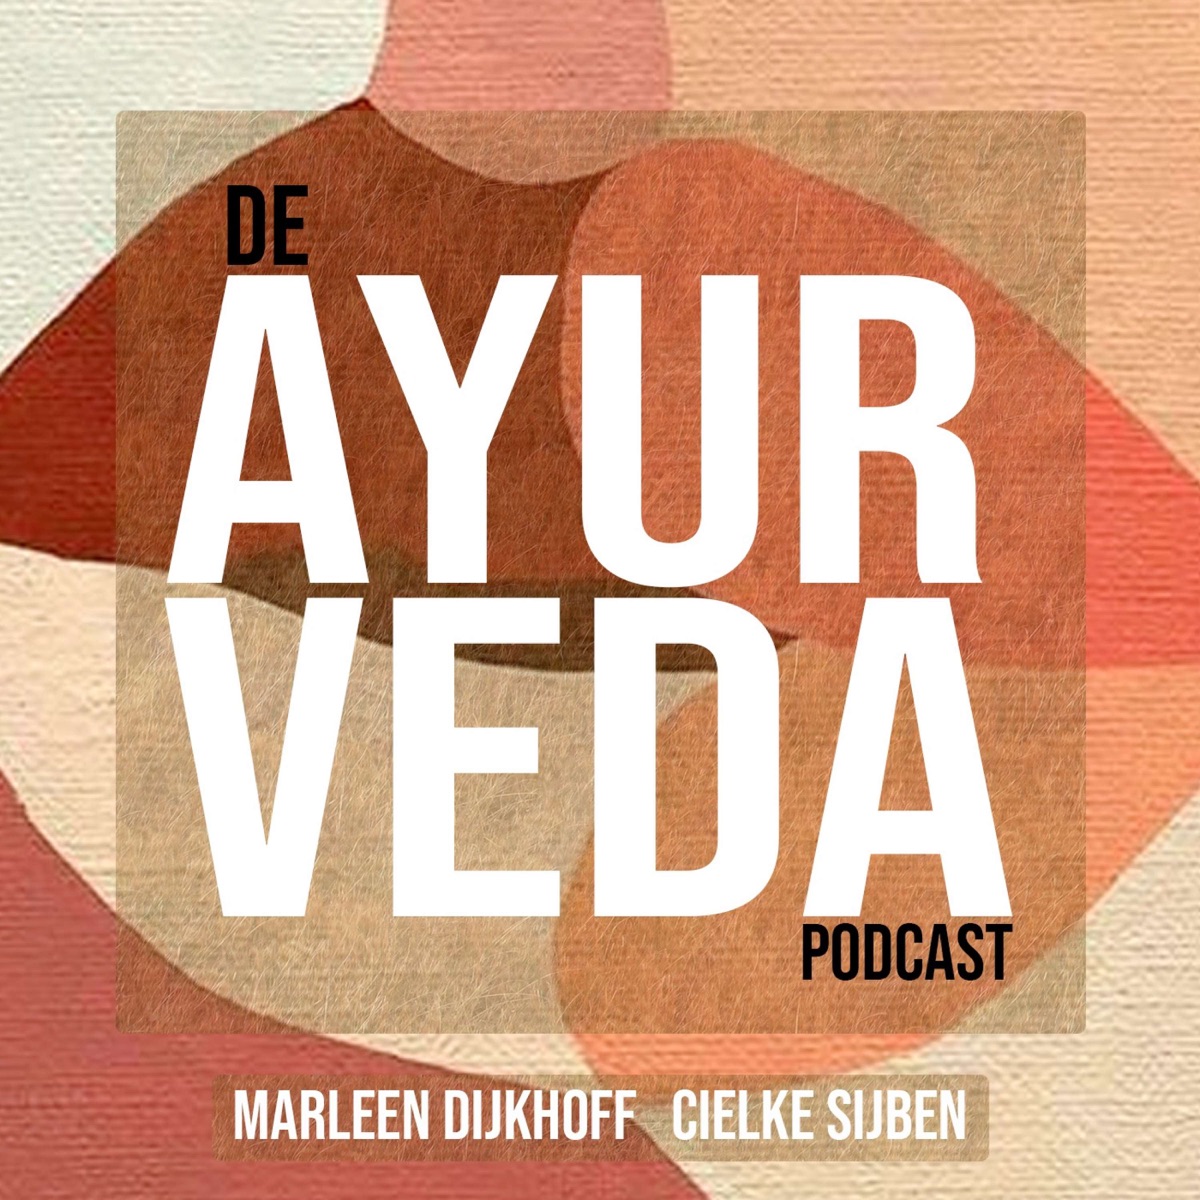 De Ayurveda Podcast – Podcast – Podtail